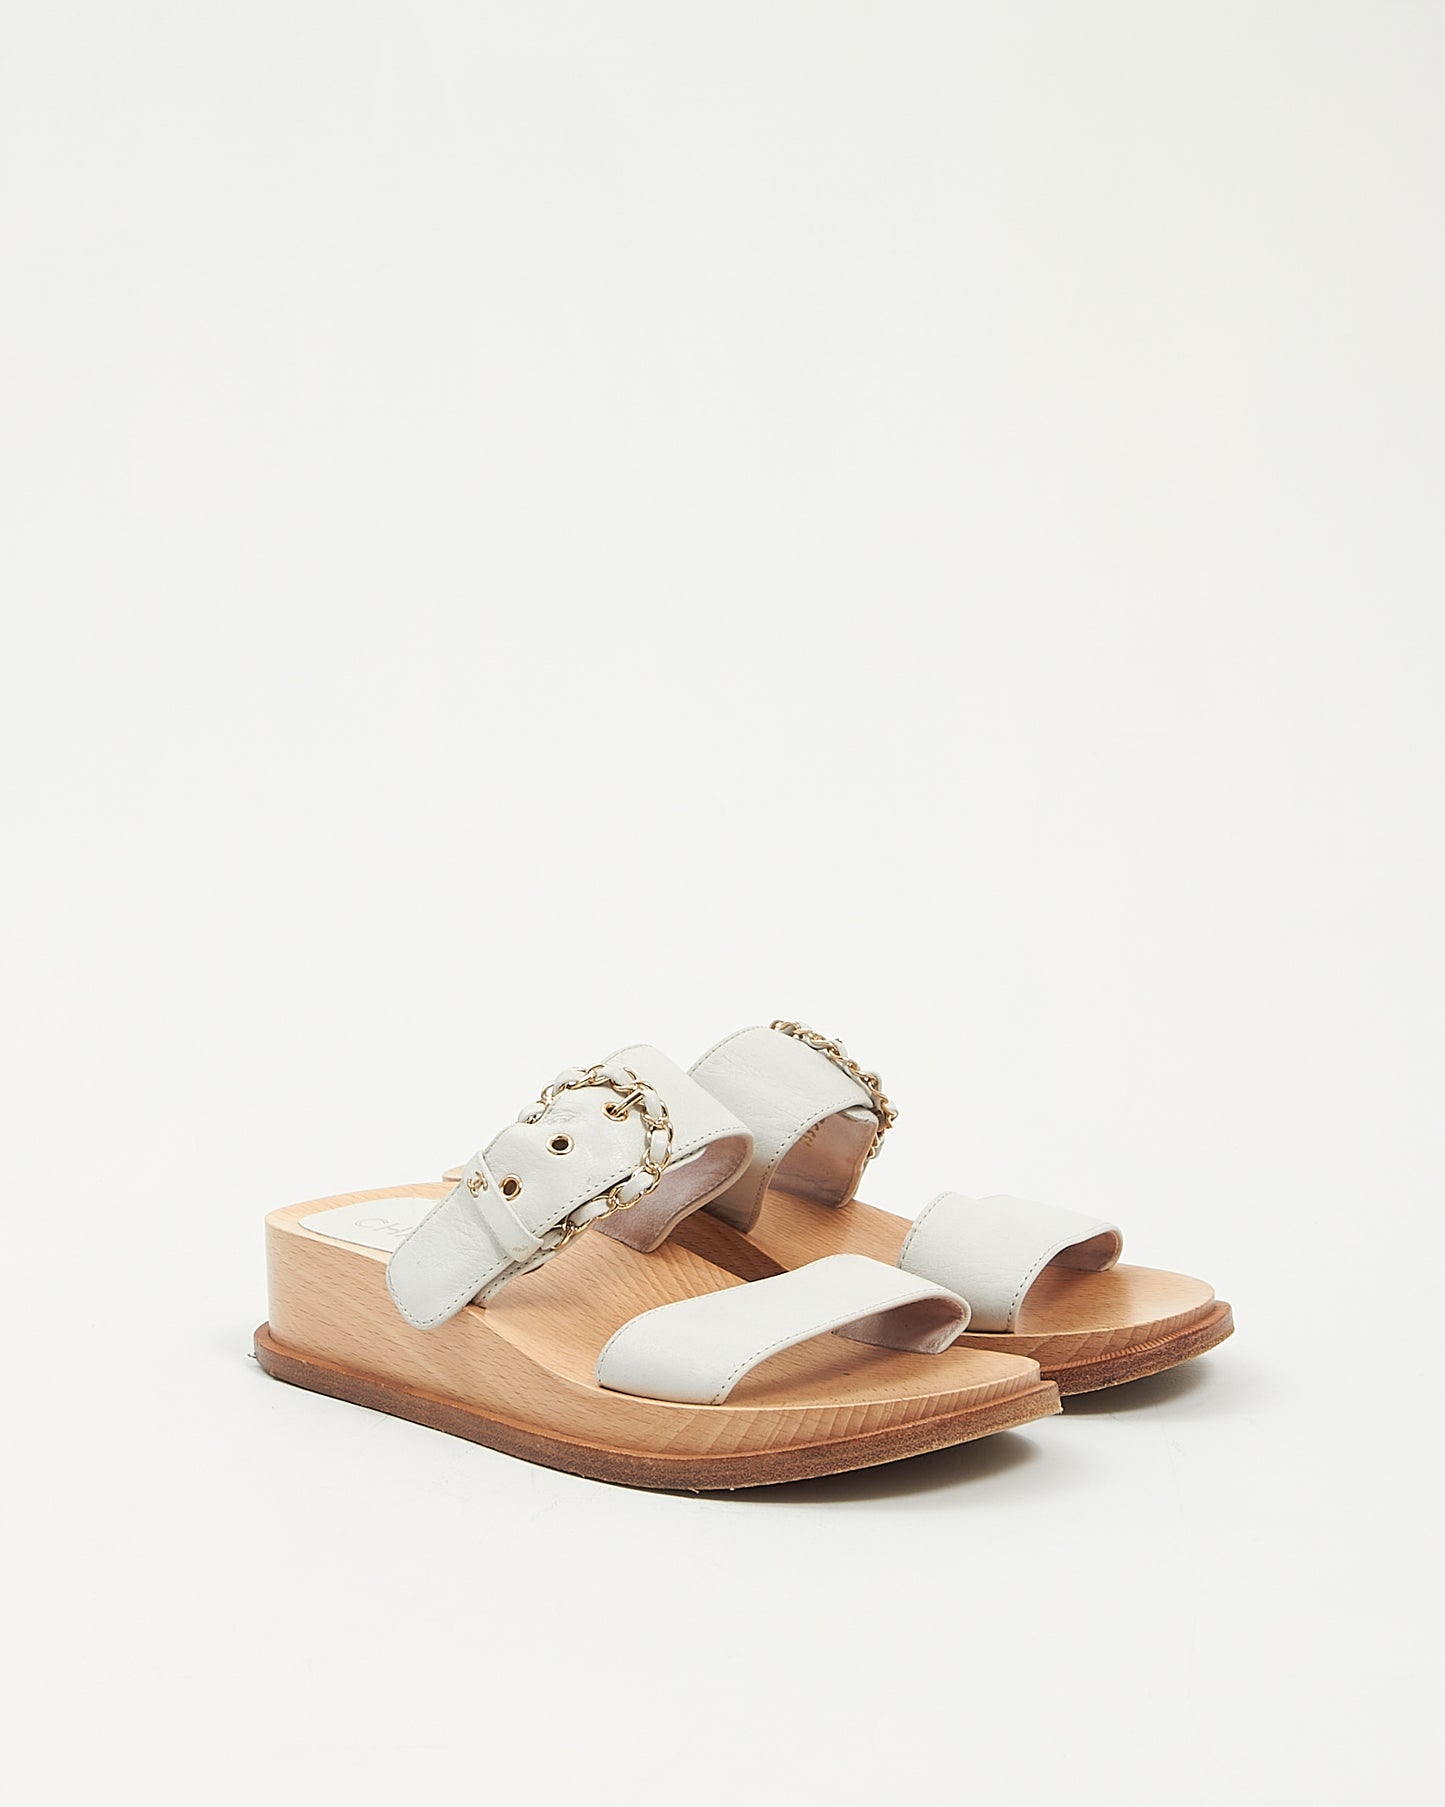 Chanel White Leather Buckle Wooden Platform Sandals - 38